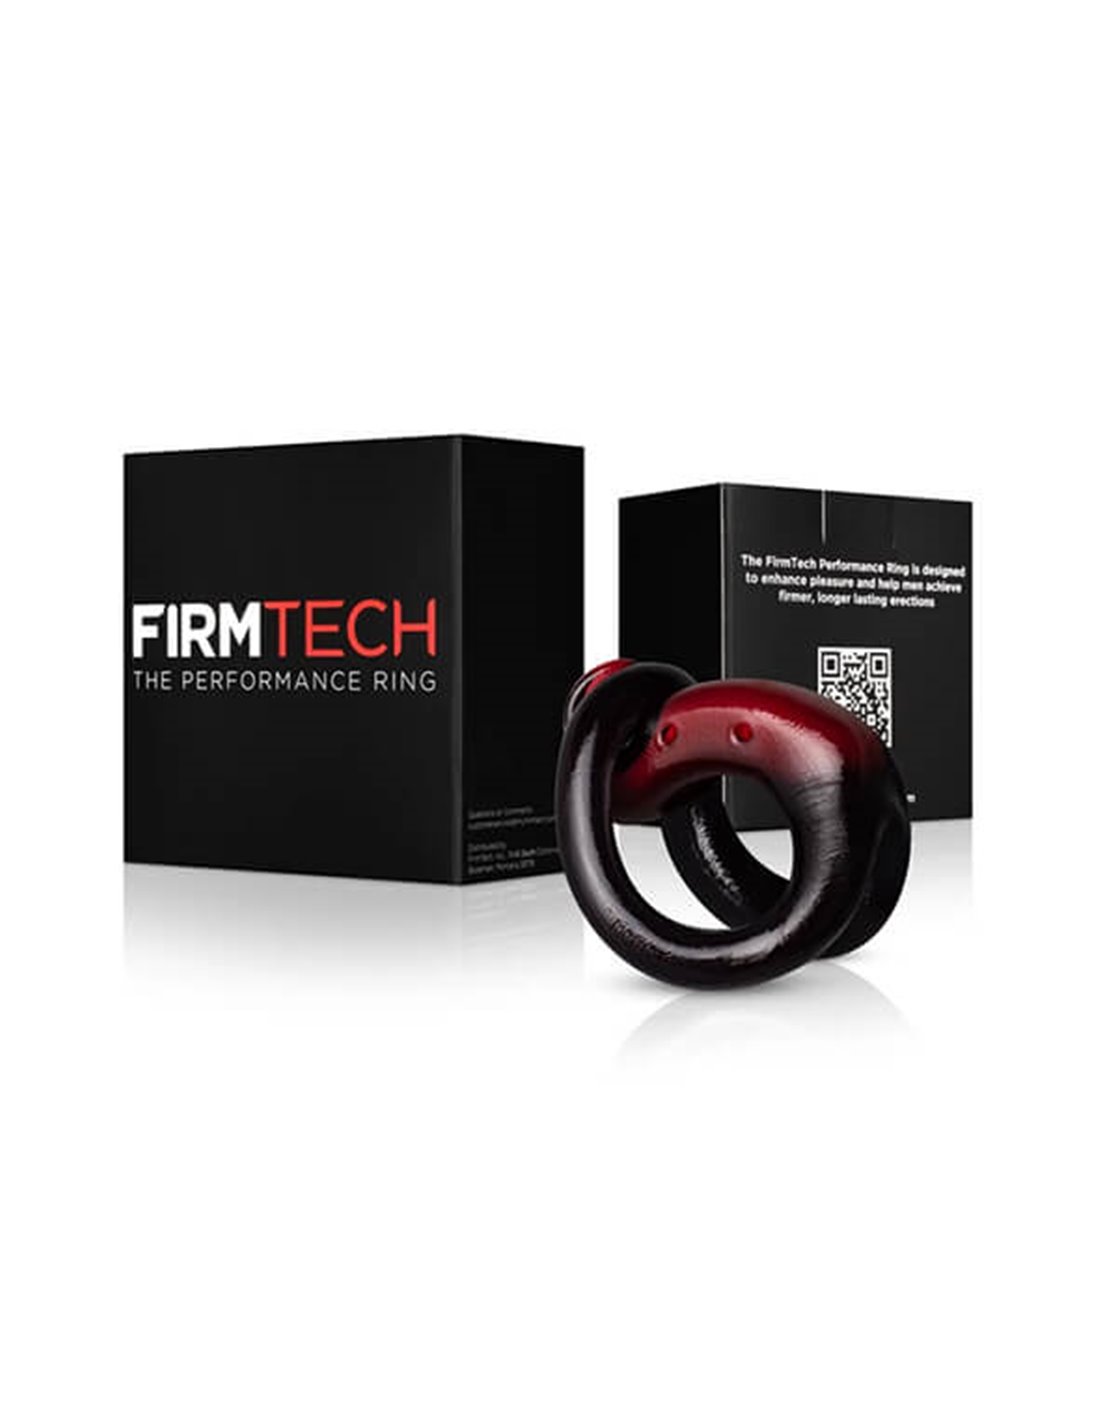 The Best Cock Ring is an Erection Tracker: FirmTech Tech Ring